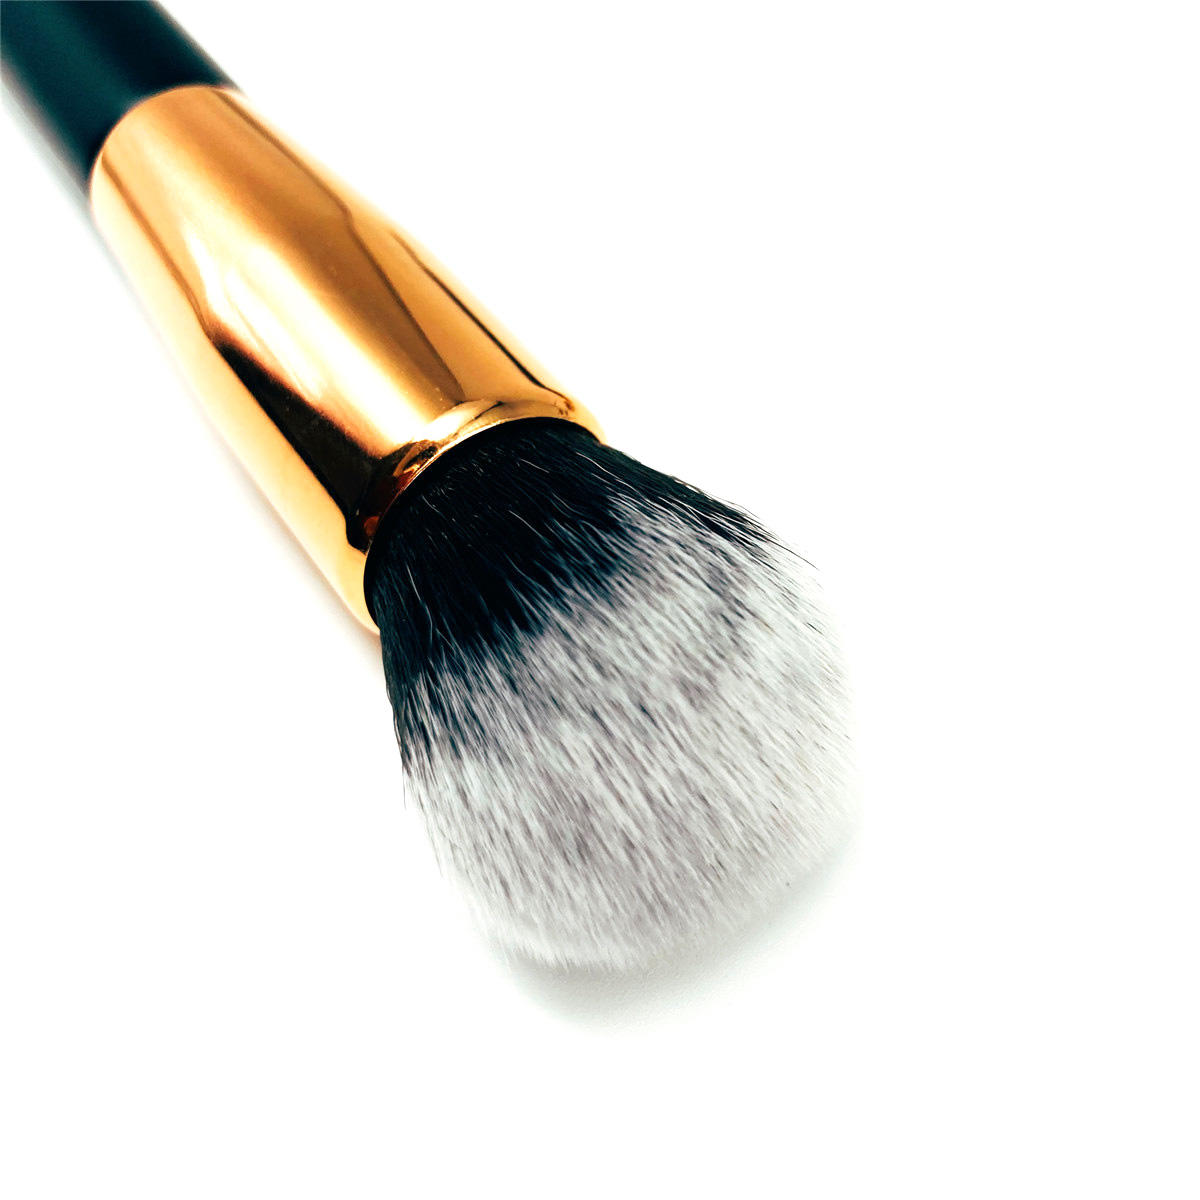 Makeup concealer brush professional synthetic hair vegan brushes cruelty free make up concealer brush